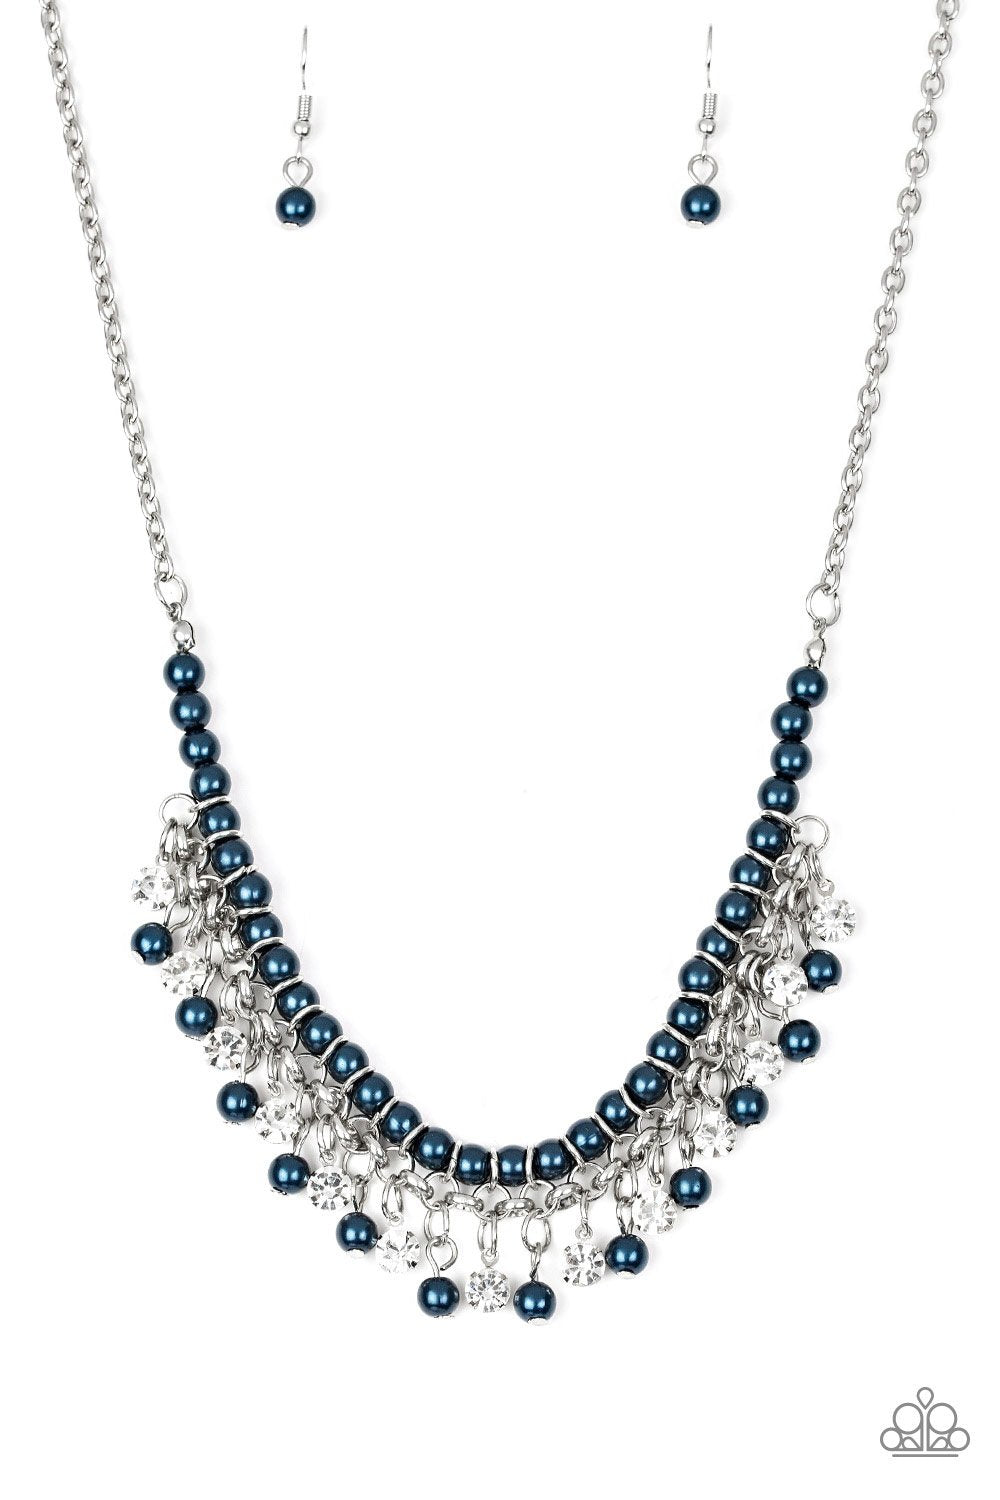 Paparazzi Necklace- Seasonal Sensation- Blue, Silver and Brown Beads | eBay